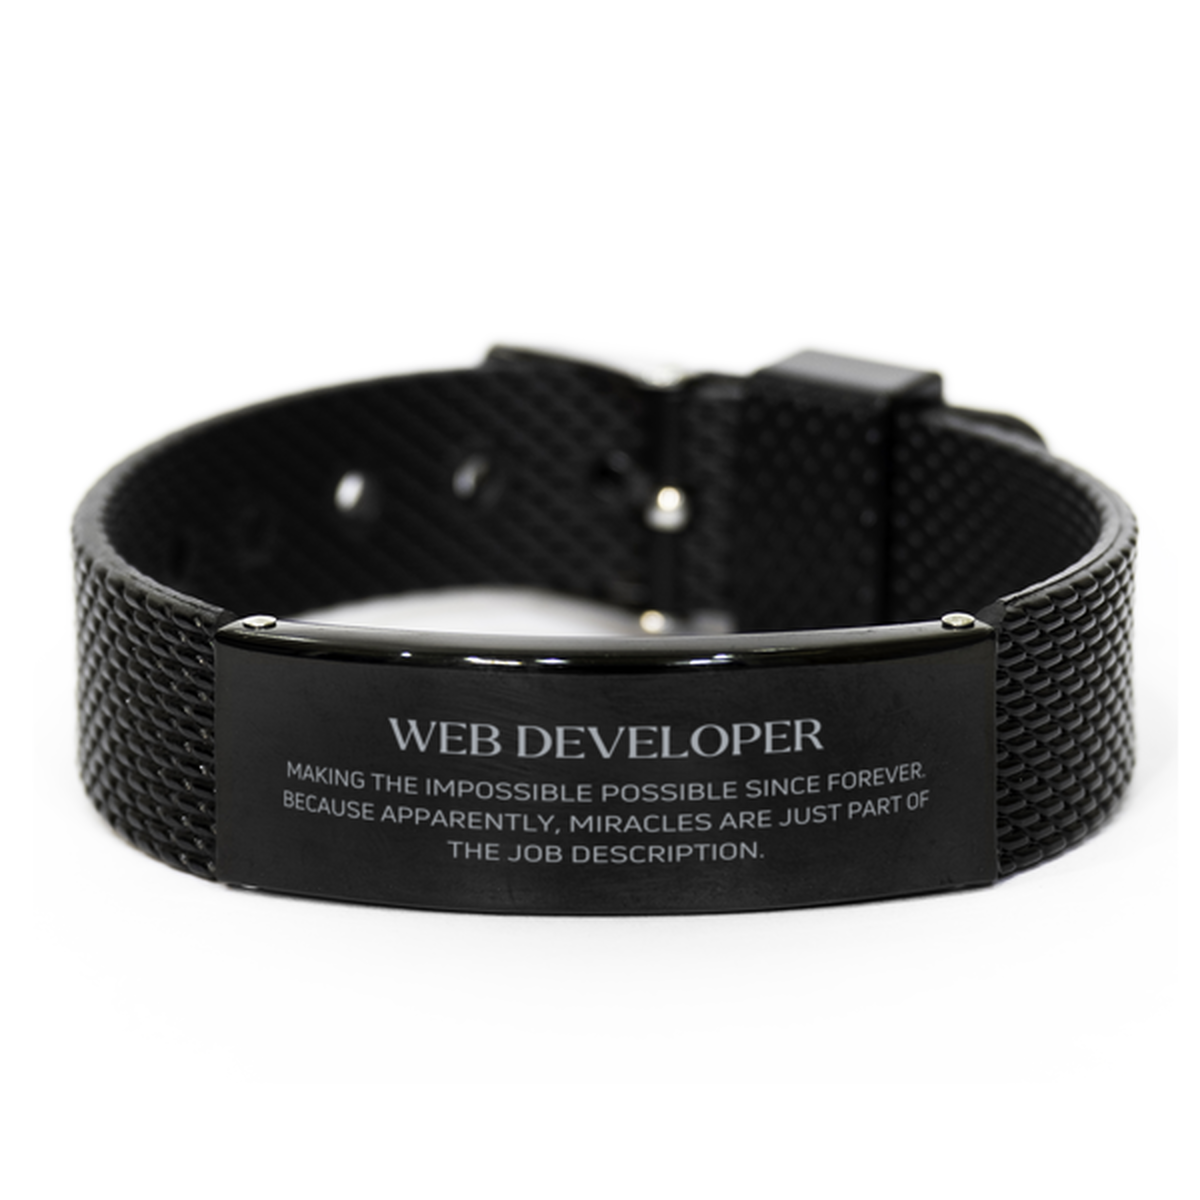 Funny Web Developer Gifts, Miracles are just part of the job description, Inspirational Birthday Black Shark Mesh Bracelet For Web Developer, Men, Women, Coworkers, Friends, Boss